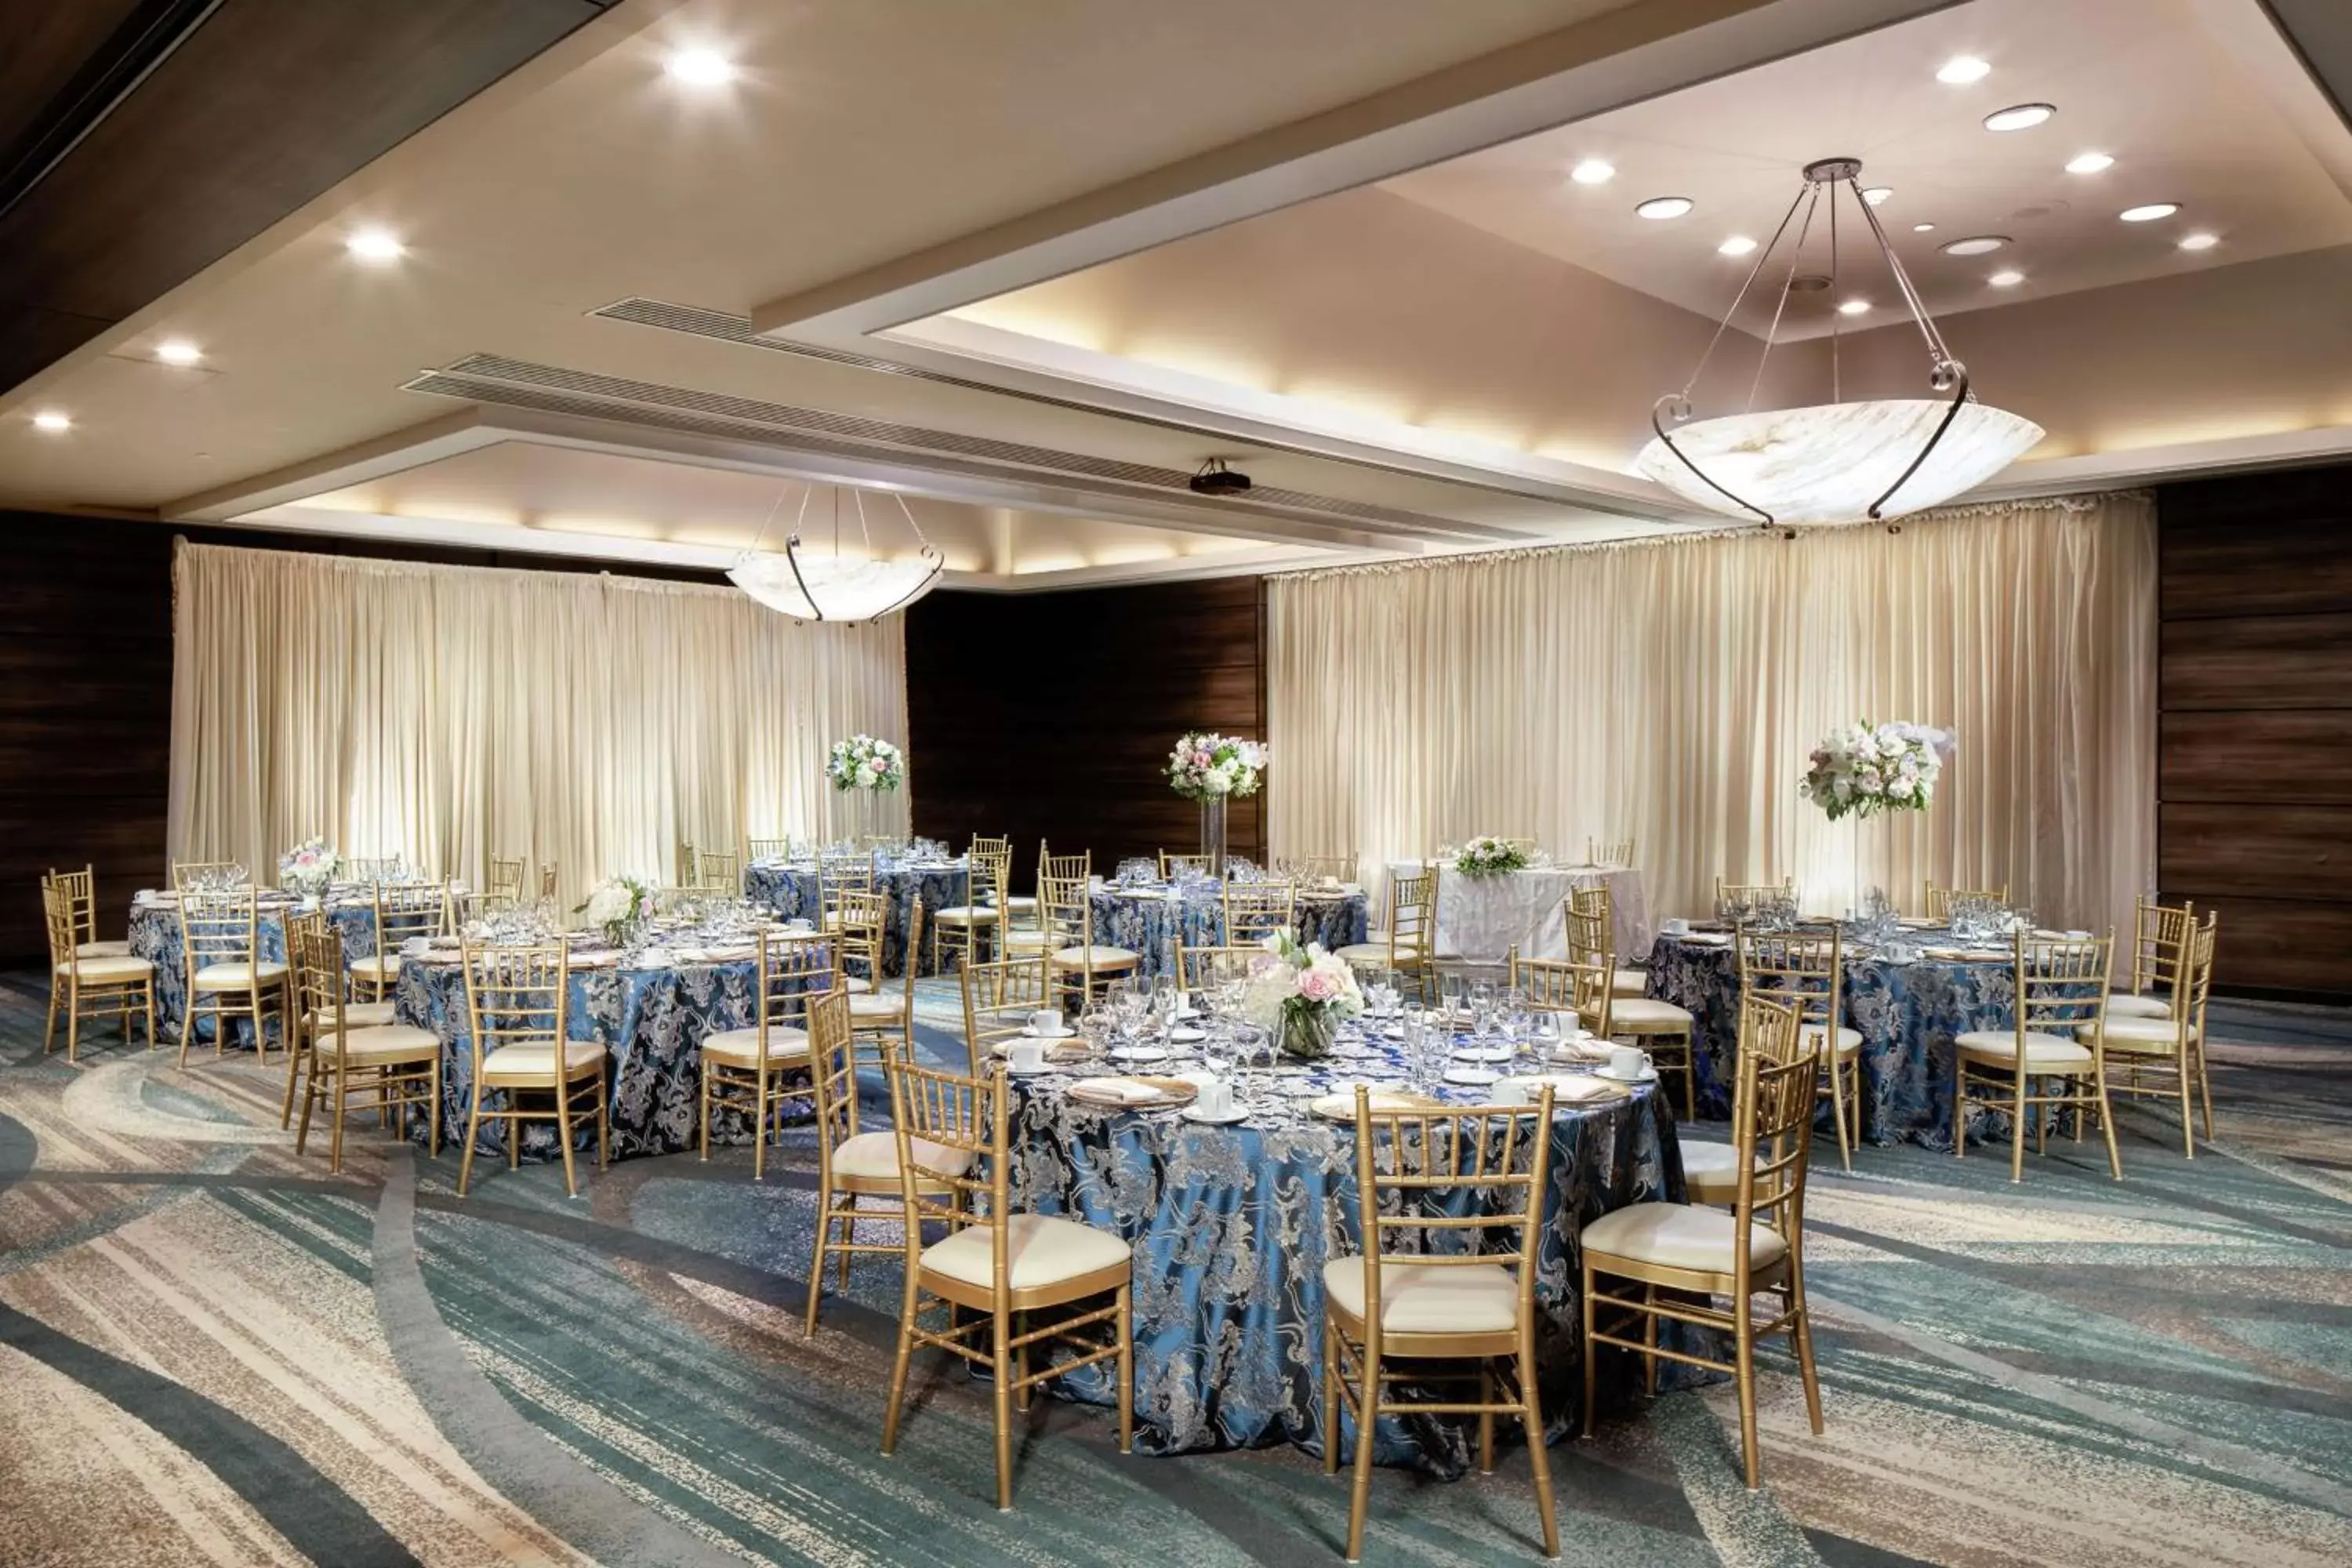 Meeting/conference room, Banquet Facilities in DoubleTree by Hilton Monrovia - Pasadena Area